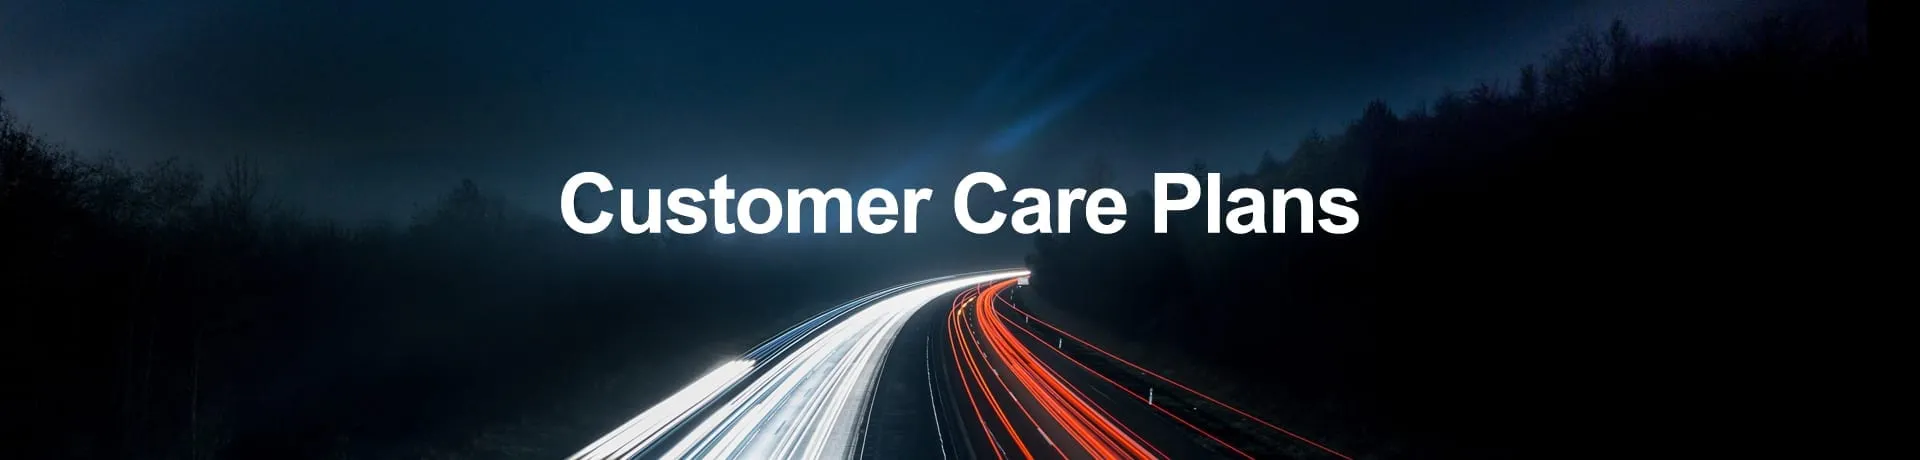 customer-care-plane-banner